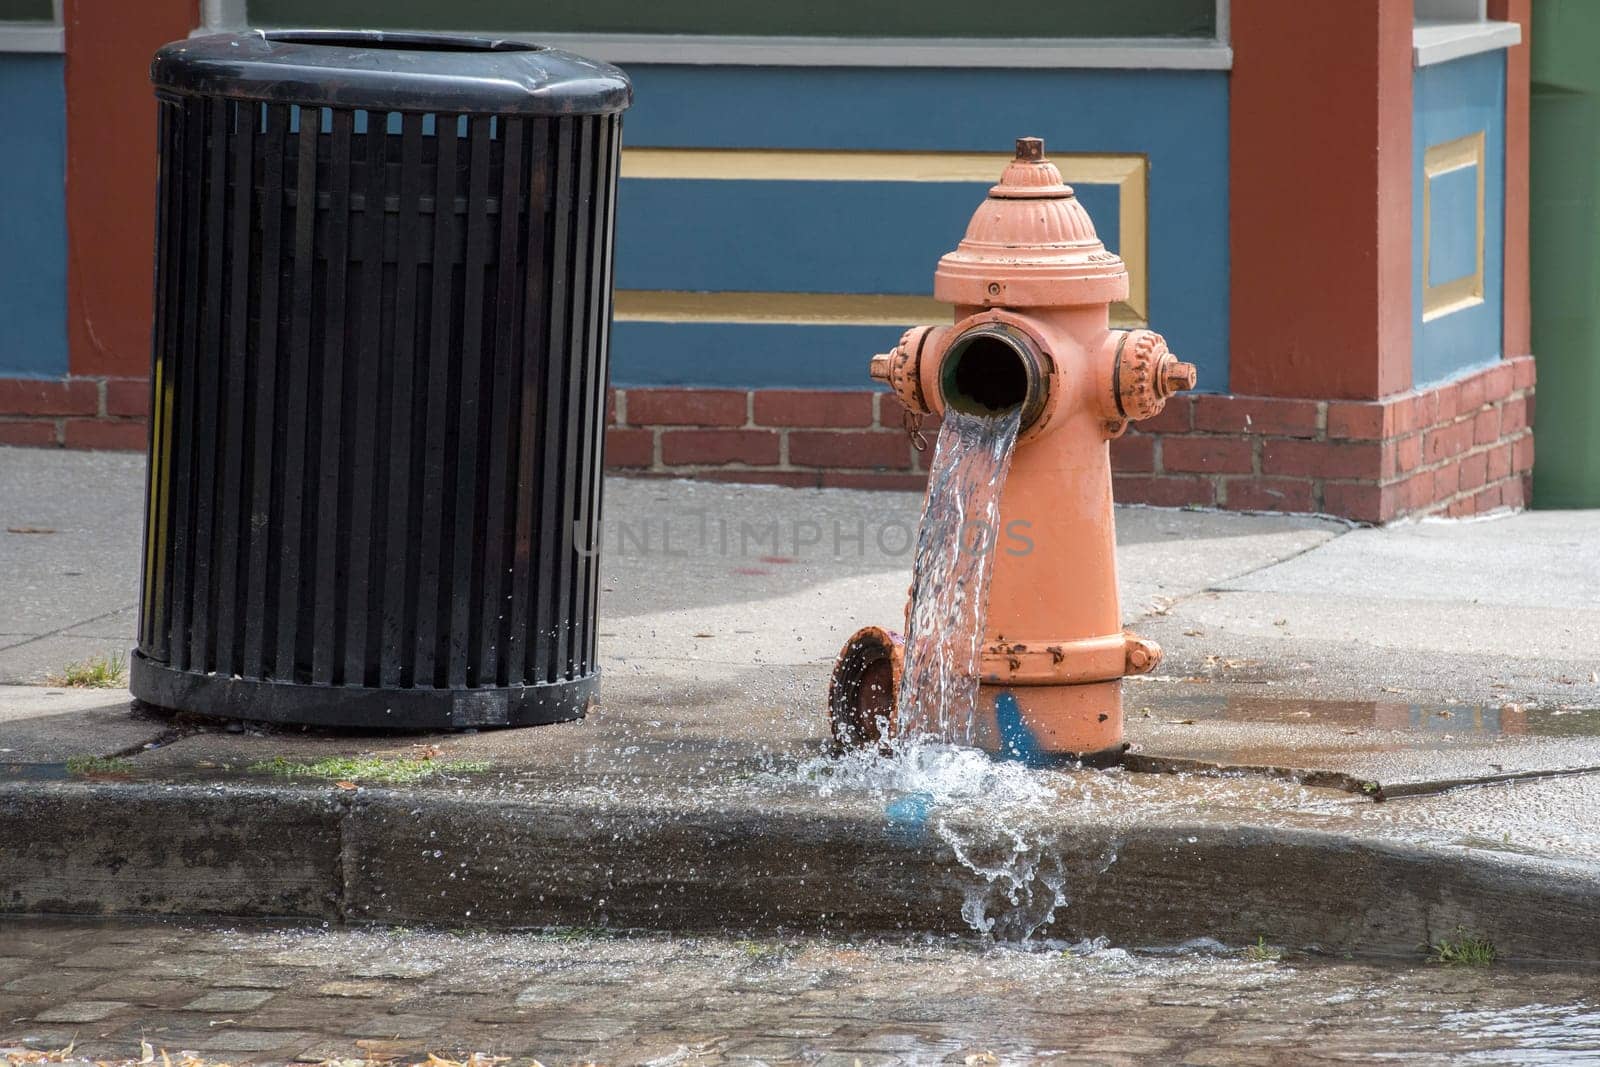 Street orange hydrant spreading water on the street by AndreaIzzotti